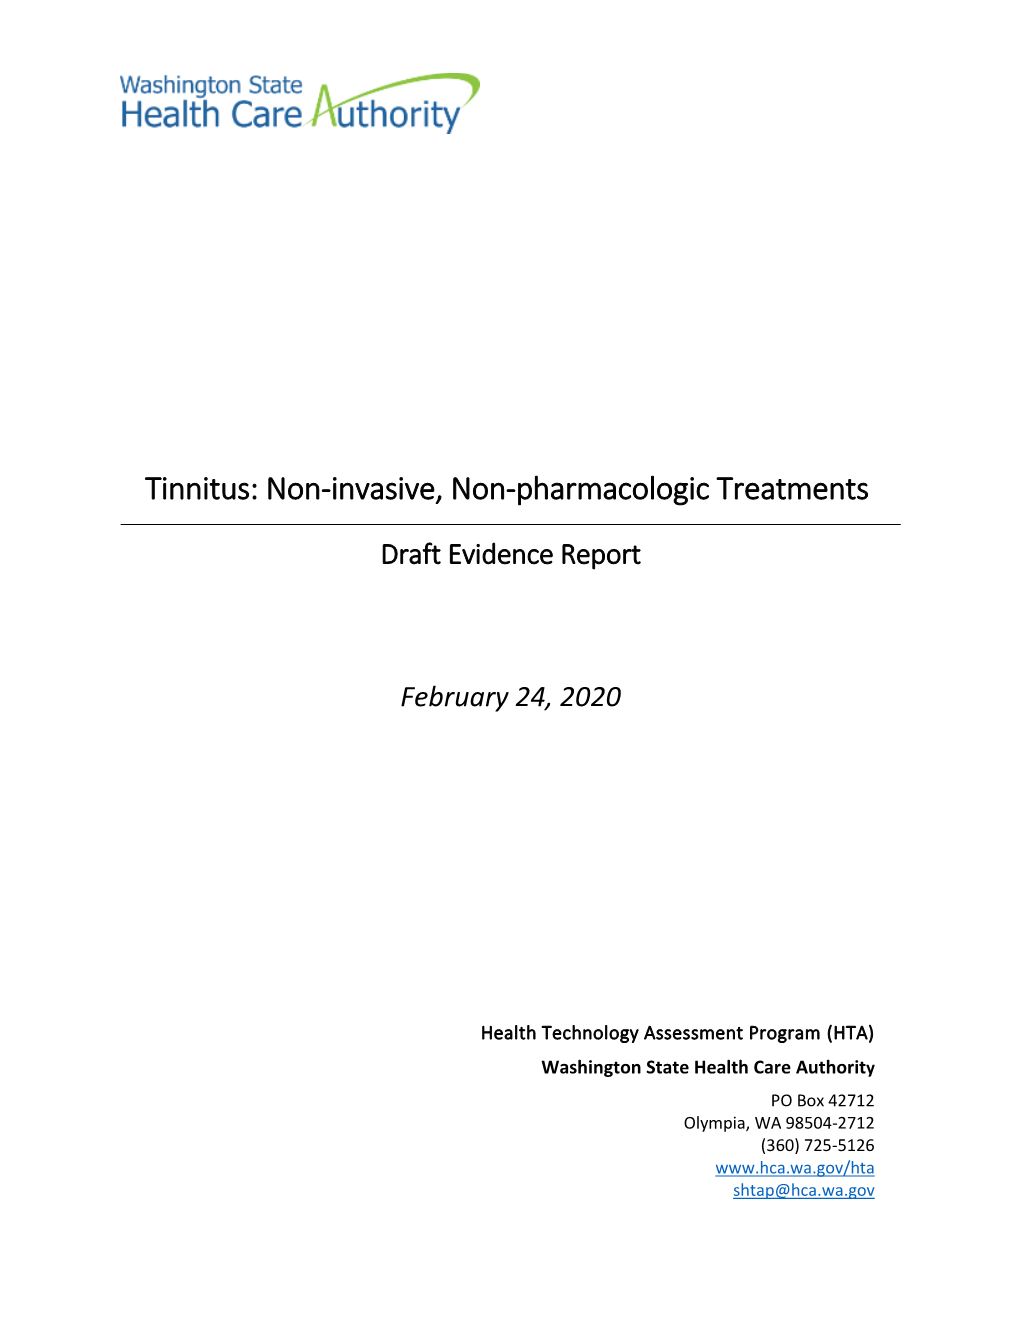 Tinnitus: Non-Invasive, Non-Pharmacologic Treatments Draft Evidence Report